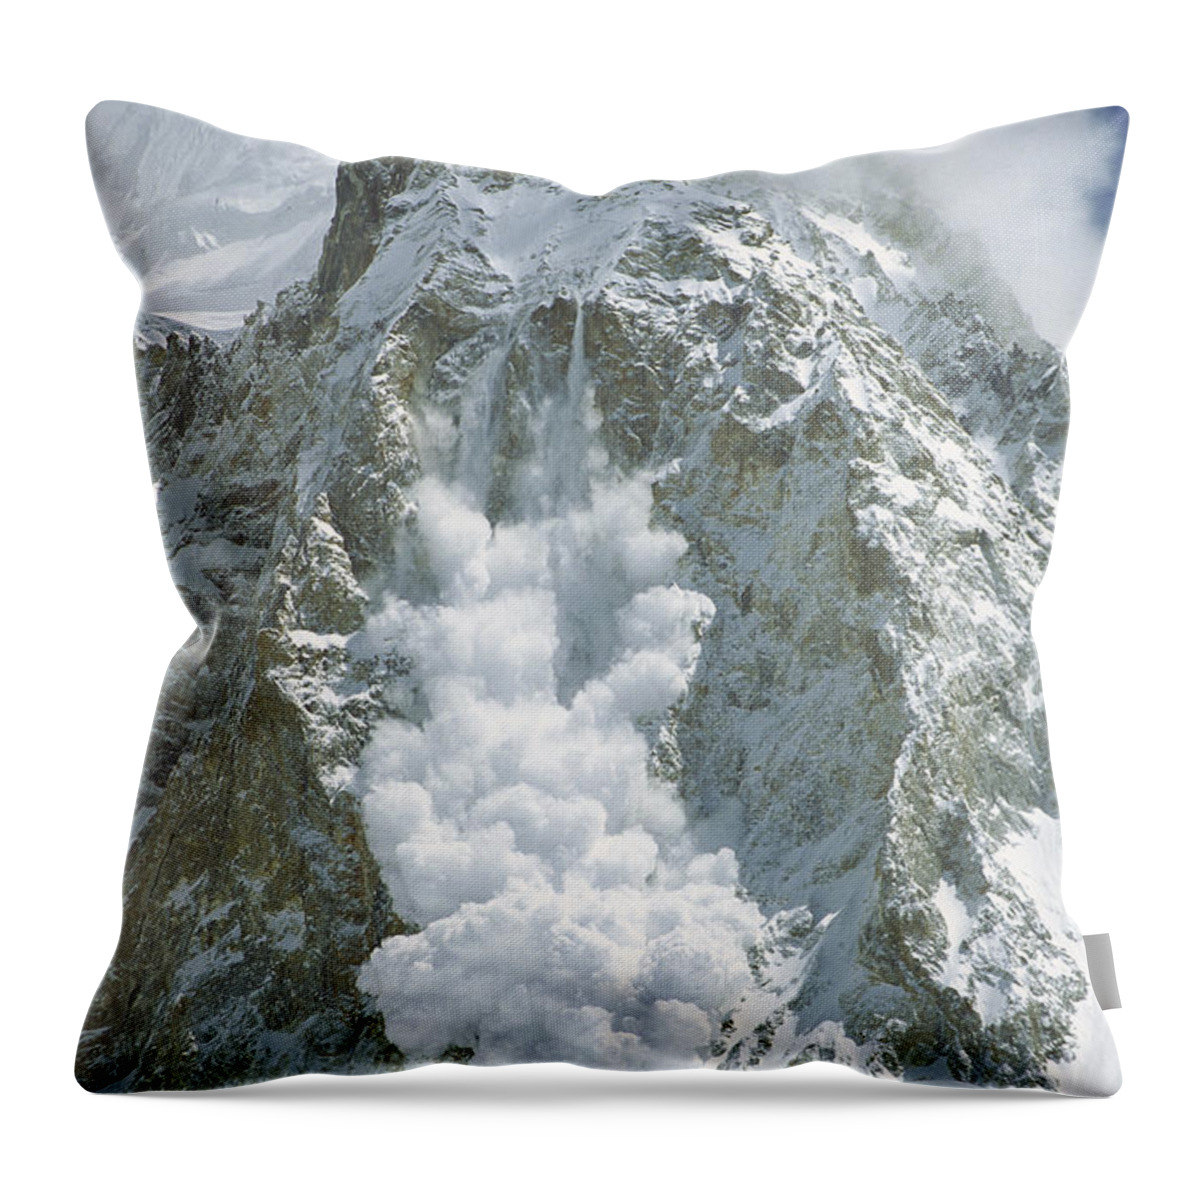 Feb0514 Throw Pillow featuring the photograph Avalanche Gasherbrum Baltoro Glacier by Colin Monteath